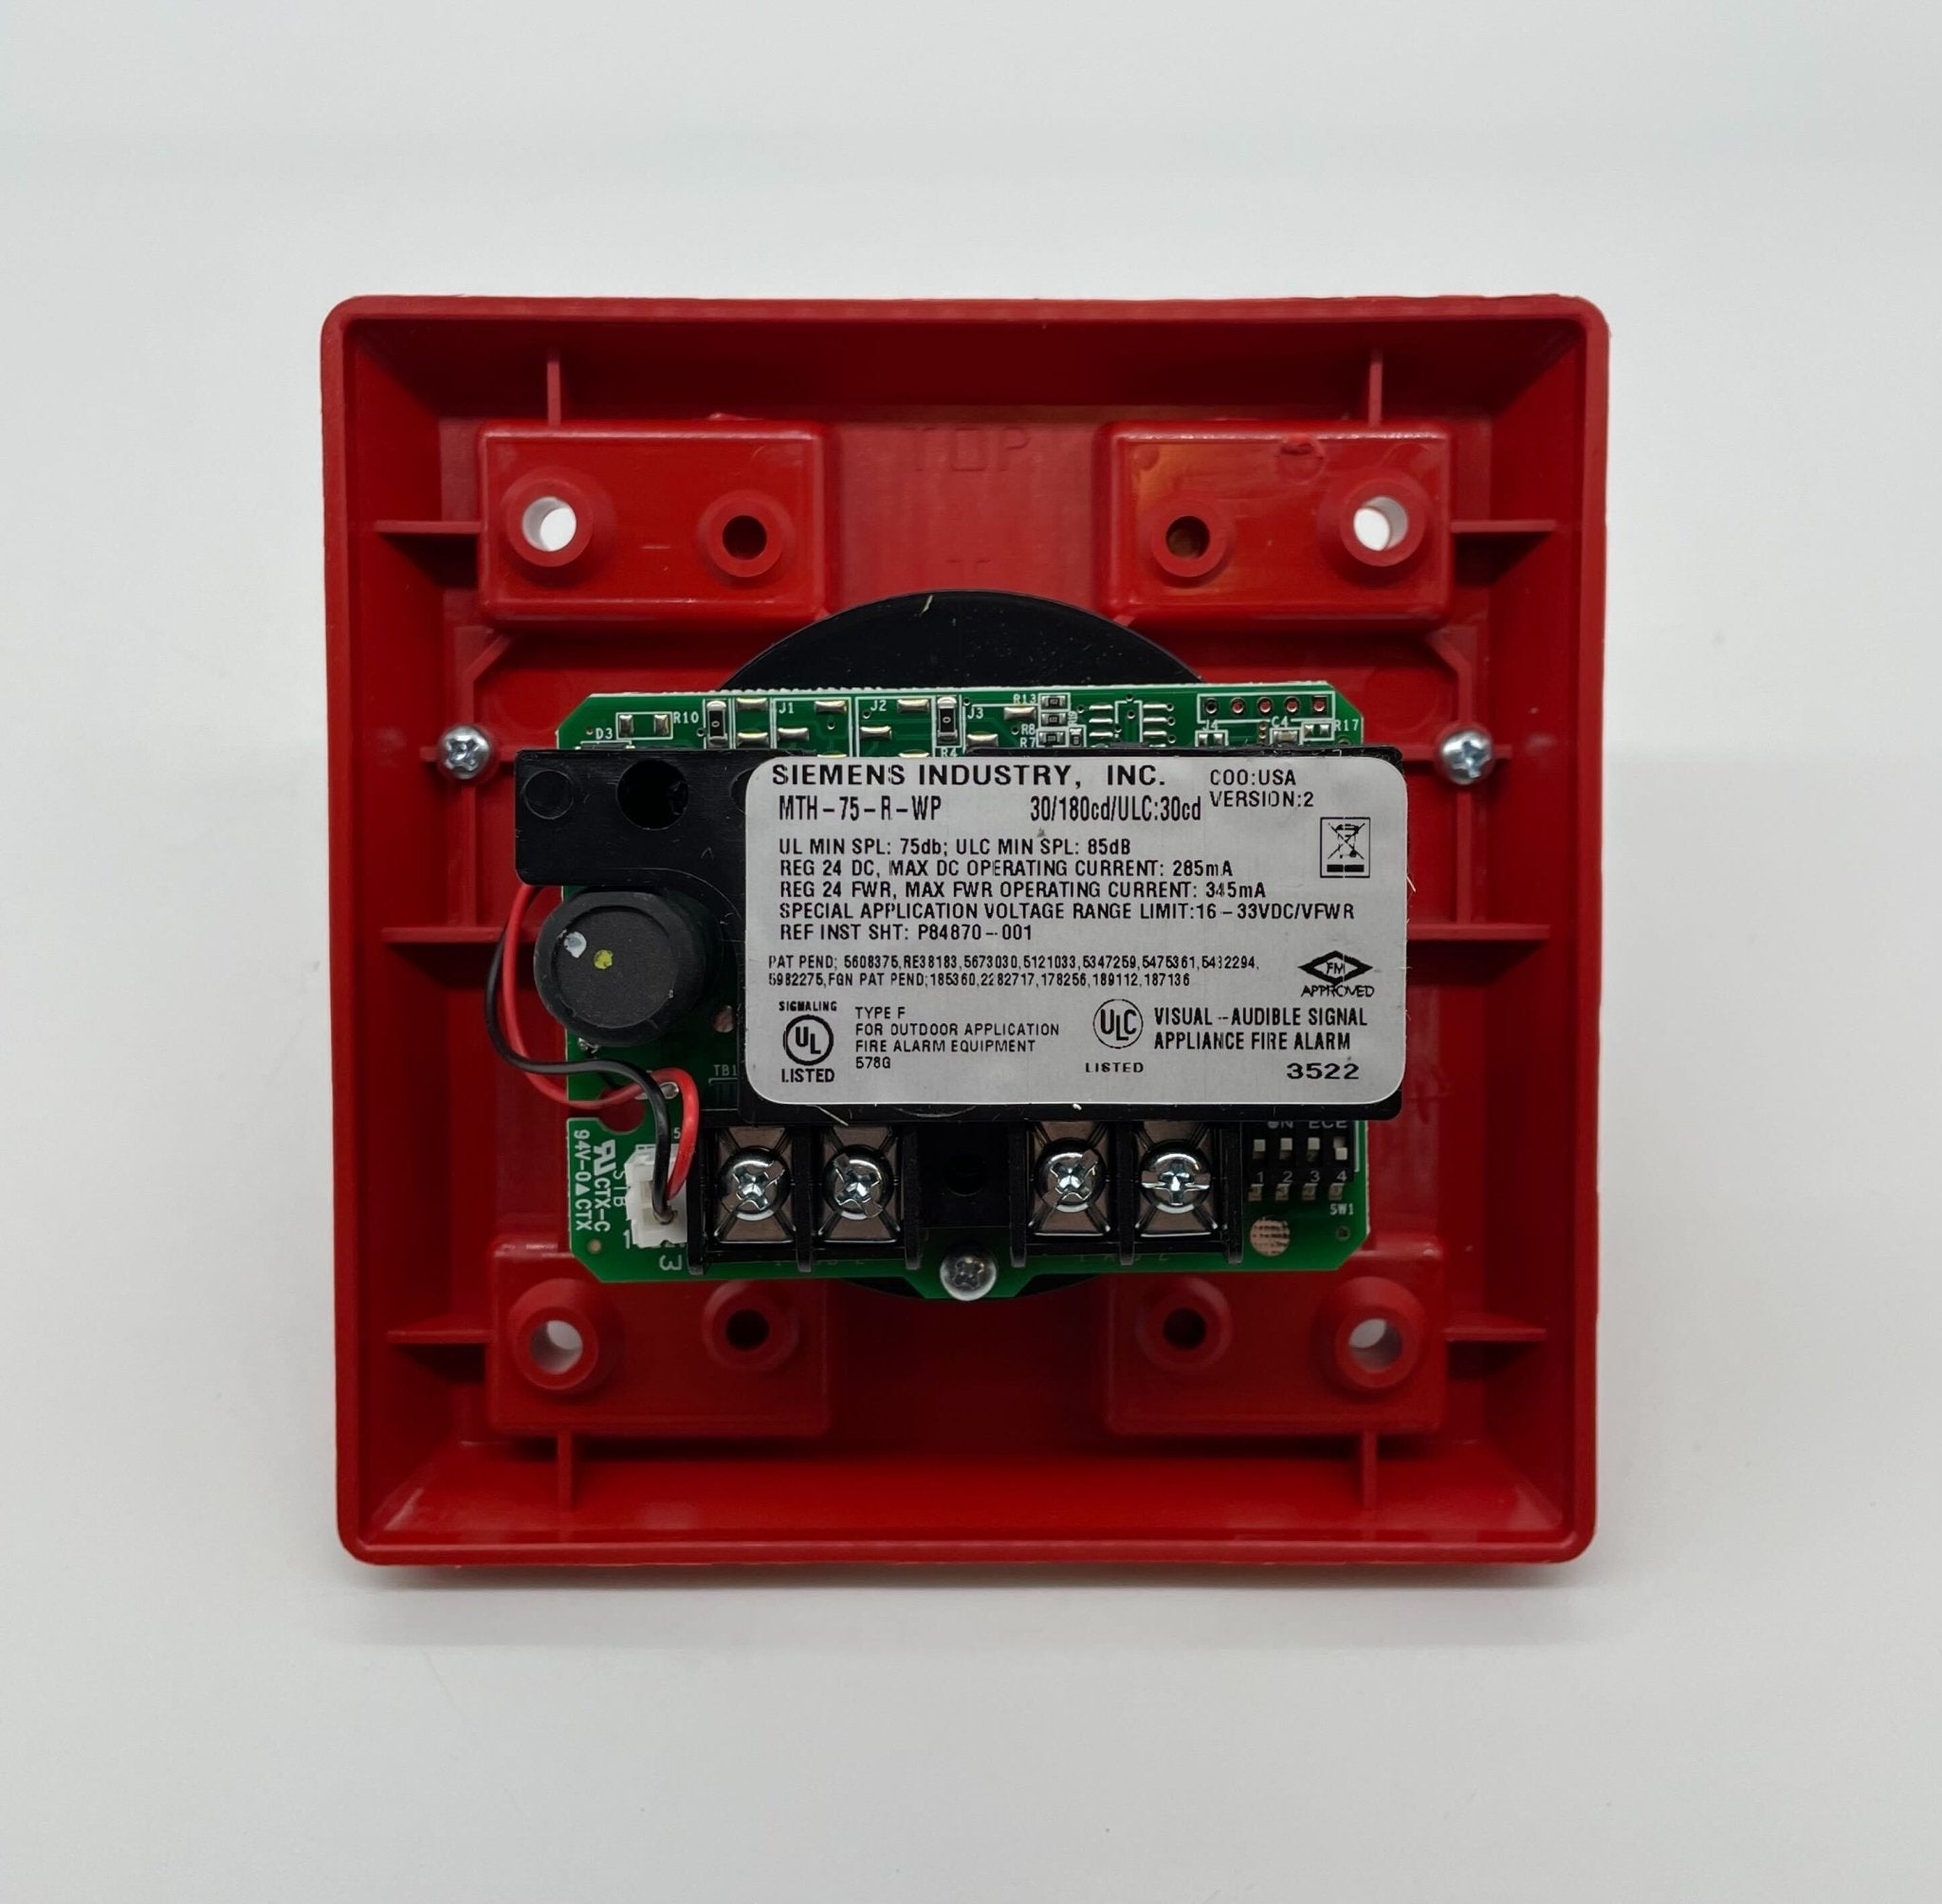 Siemens MTH-75-R-WP - The Fire Alarm Supplier